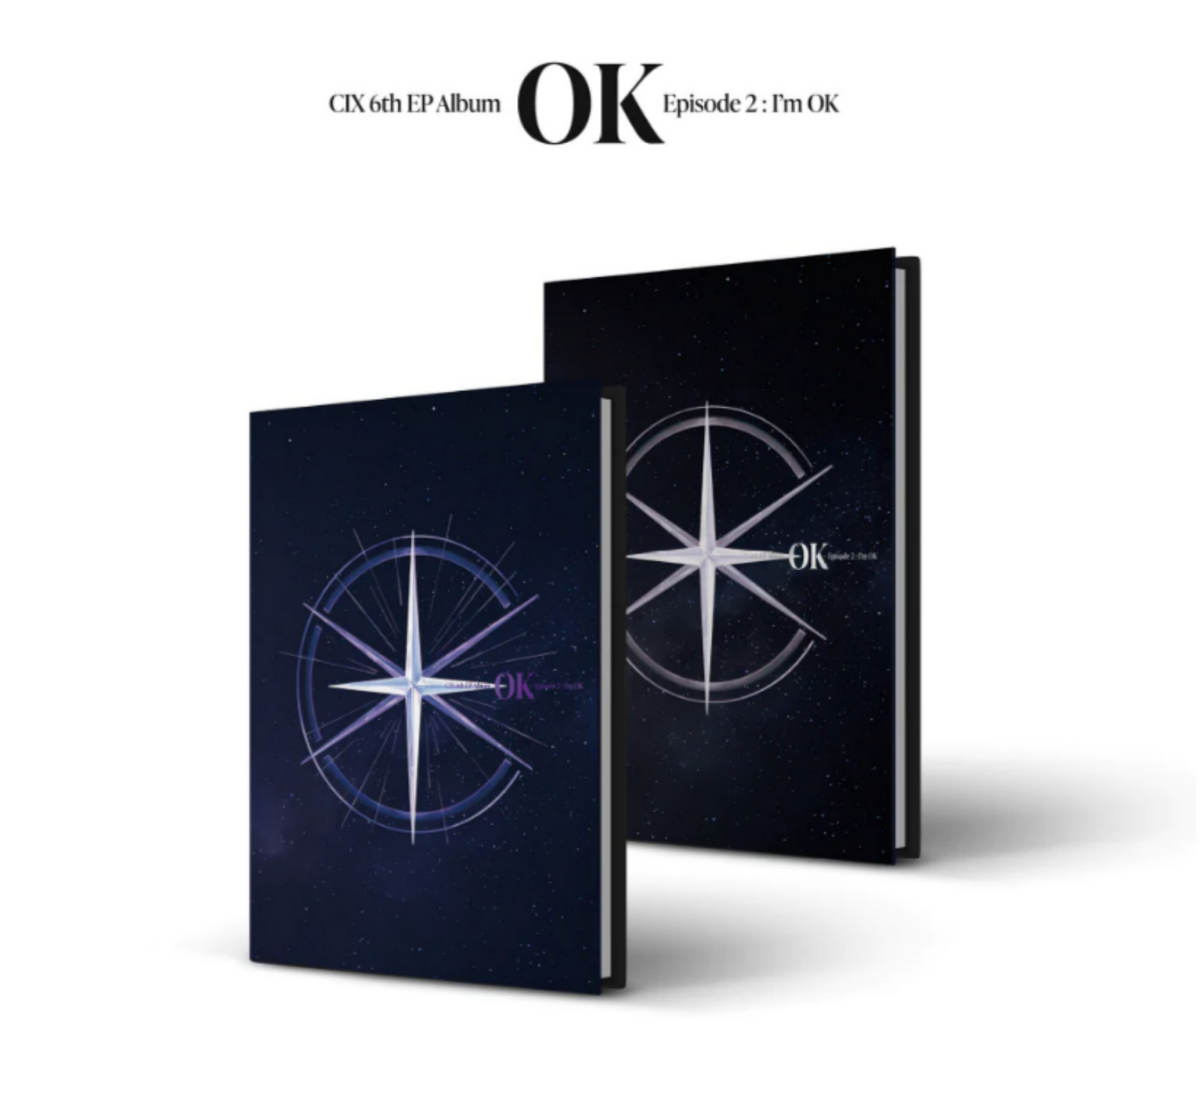 CIX EP Album Vol. 6 - 'OK' Episode 2 : I'm OK